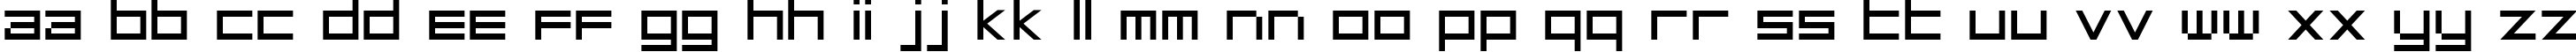 Пример написания английского алфавита шрифтом MicroTech